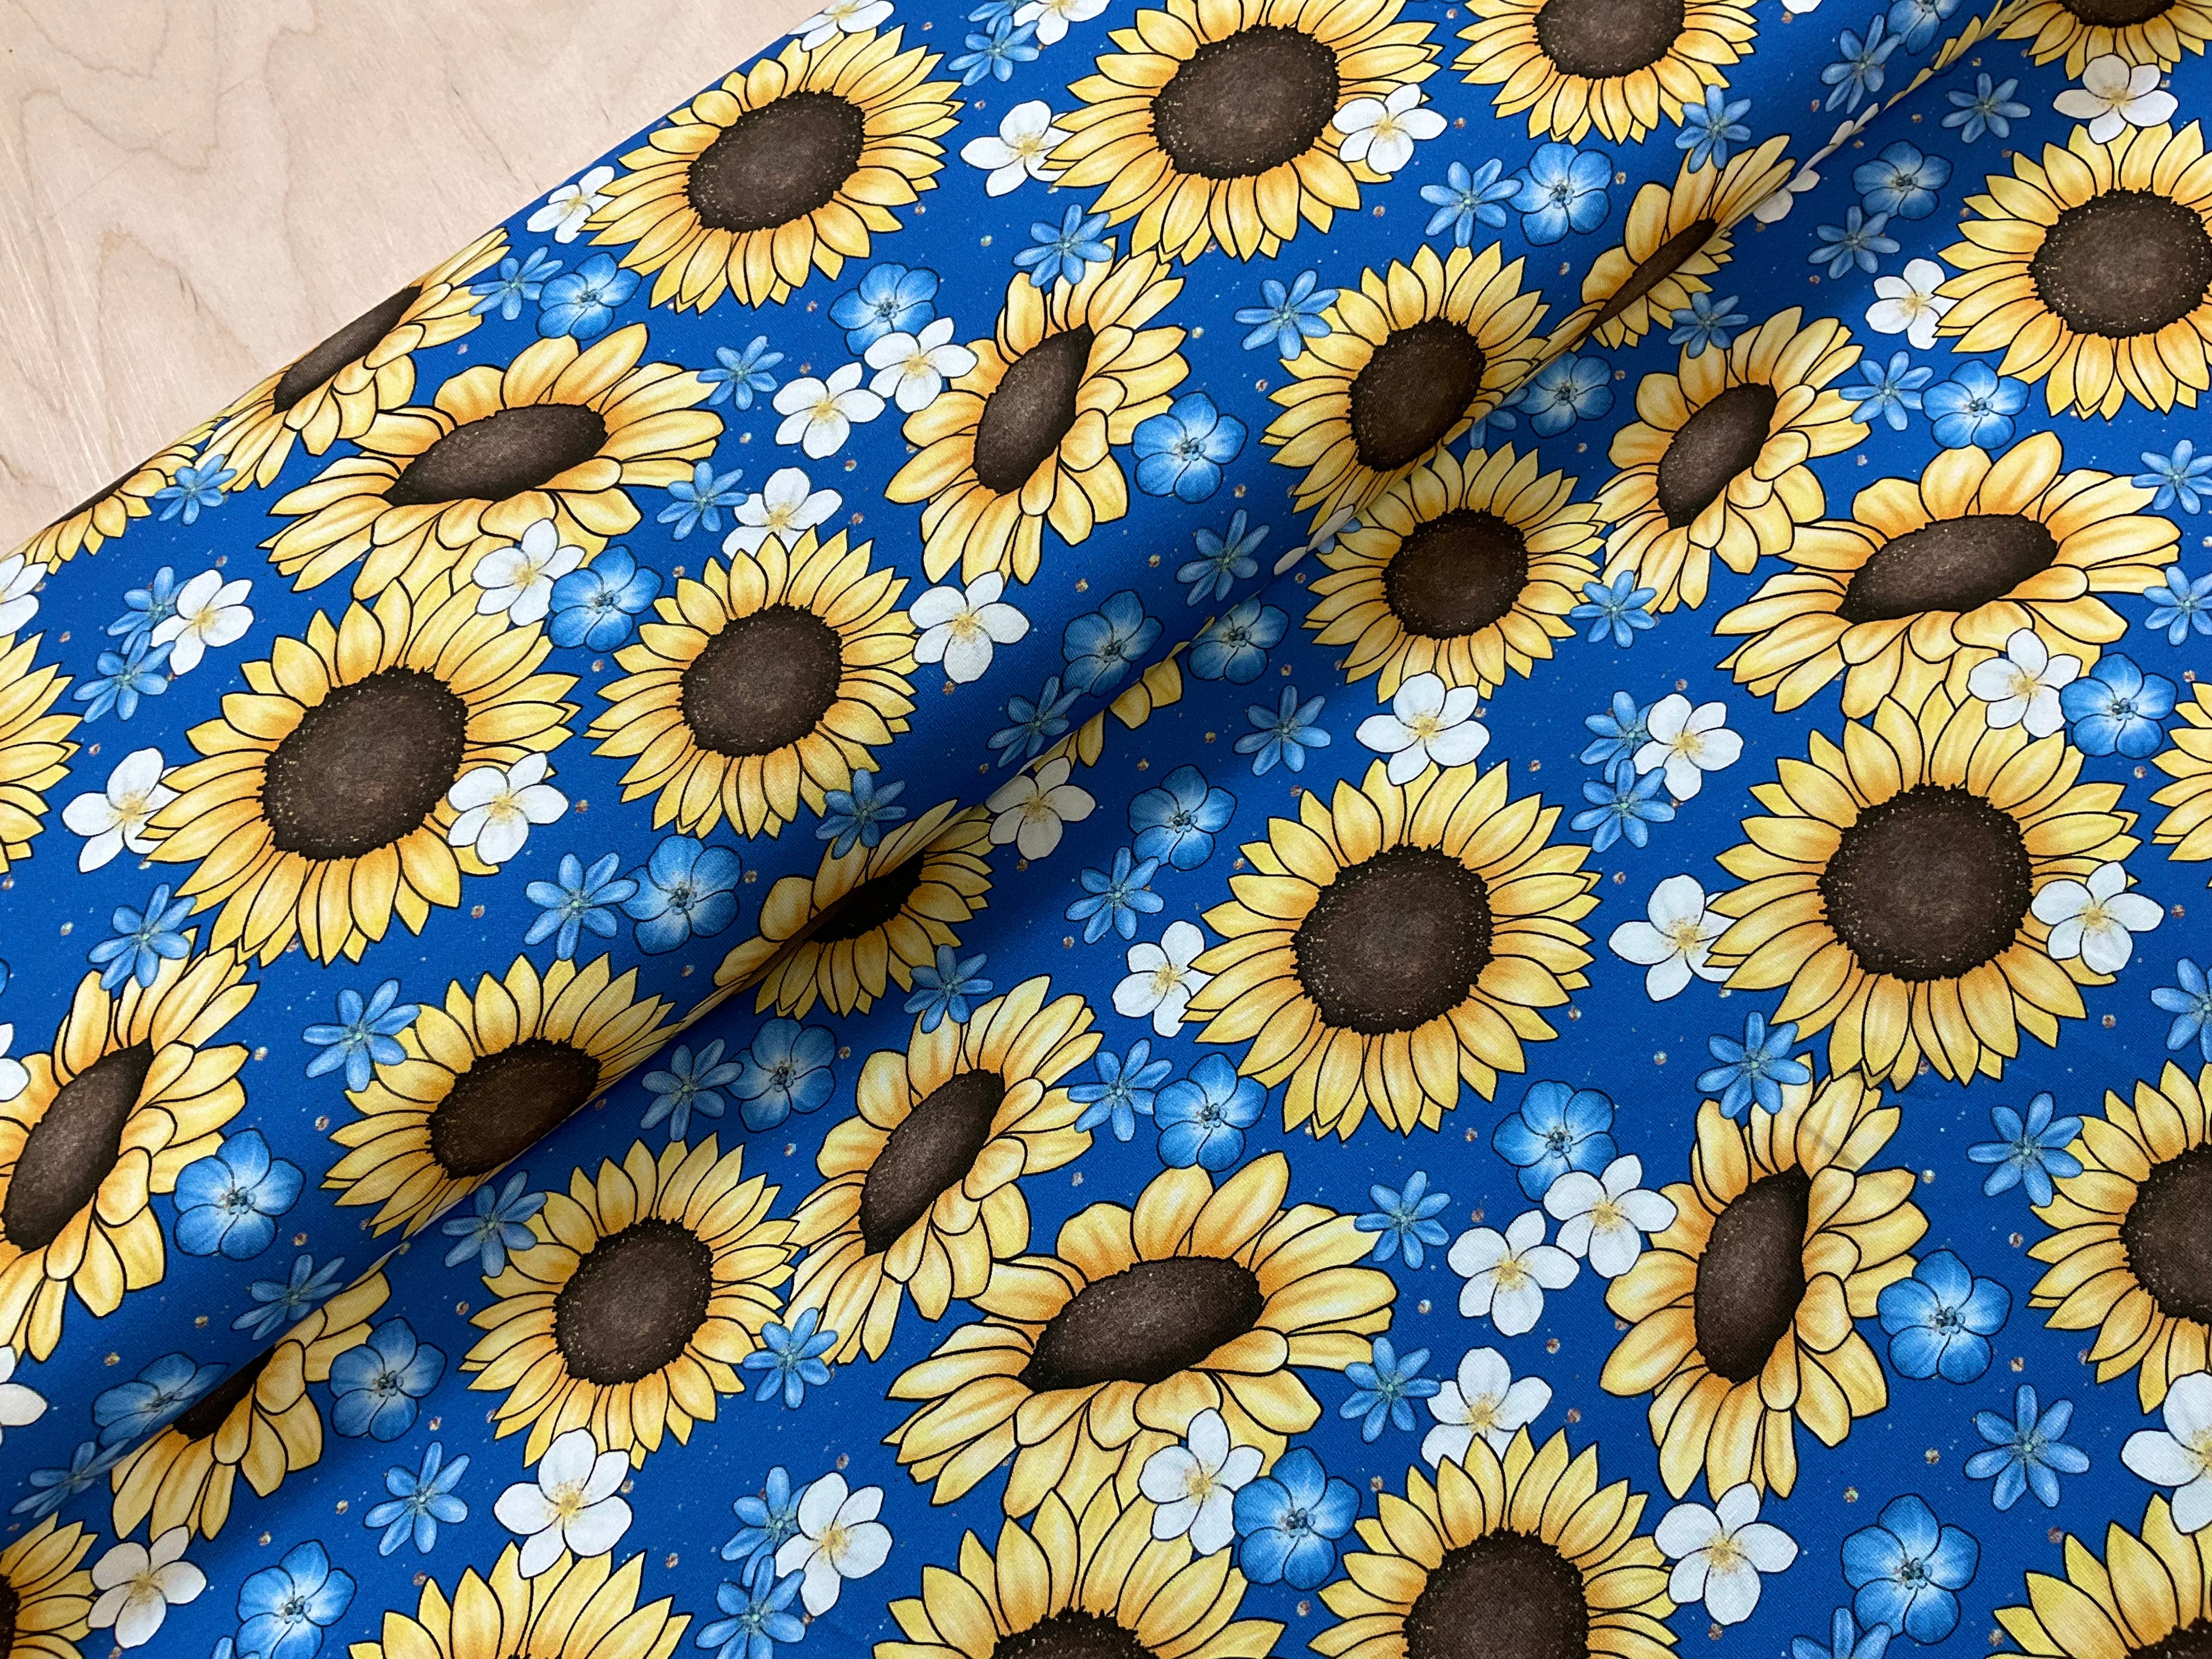 Sunflowers on Blue Cotton Jersey